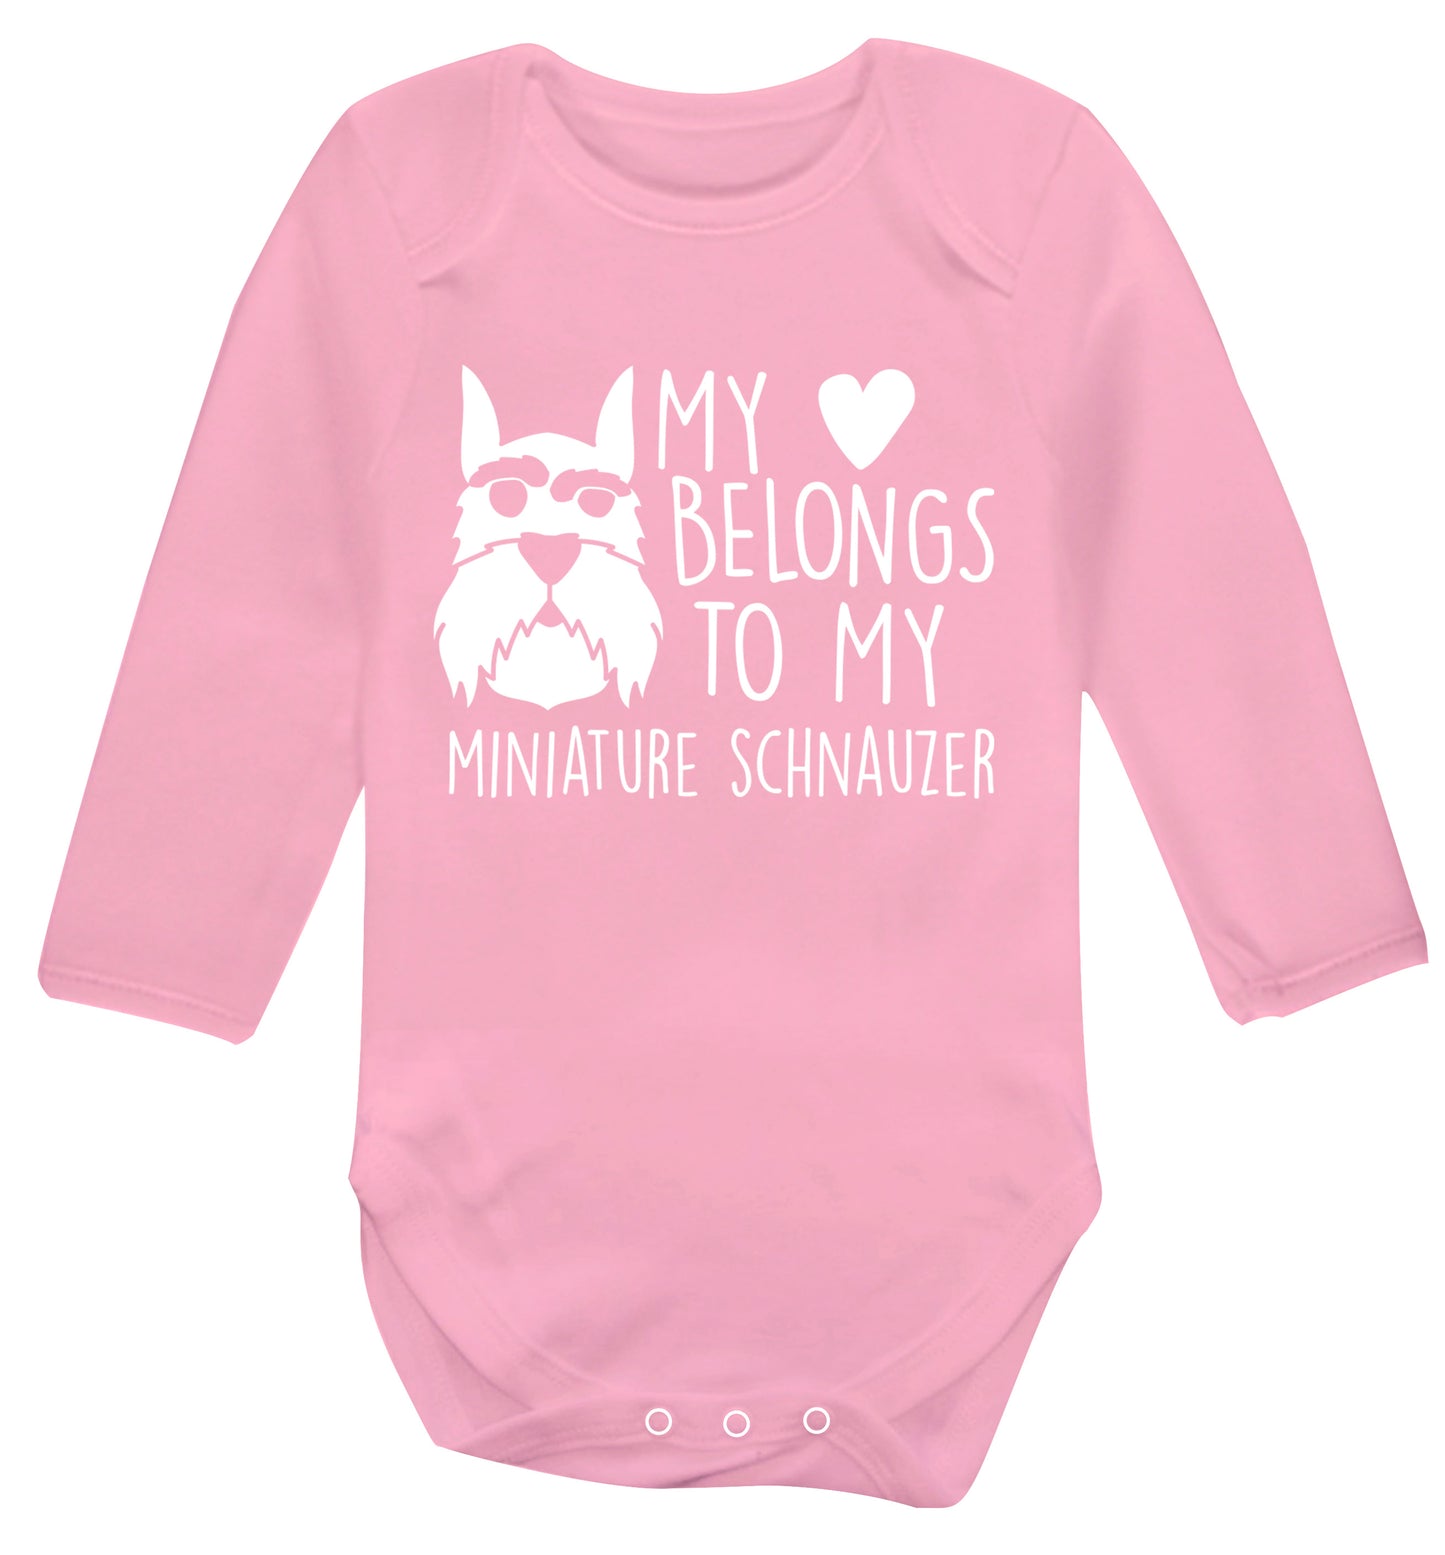 My heart belongs to my miniature schnauzer Baby Vest long sleeved pale pink 6-12 months